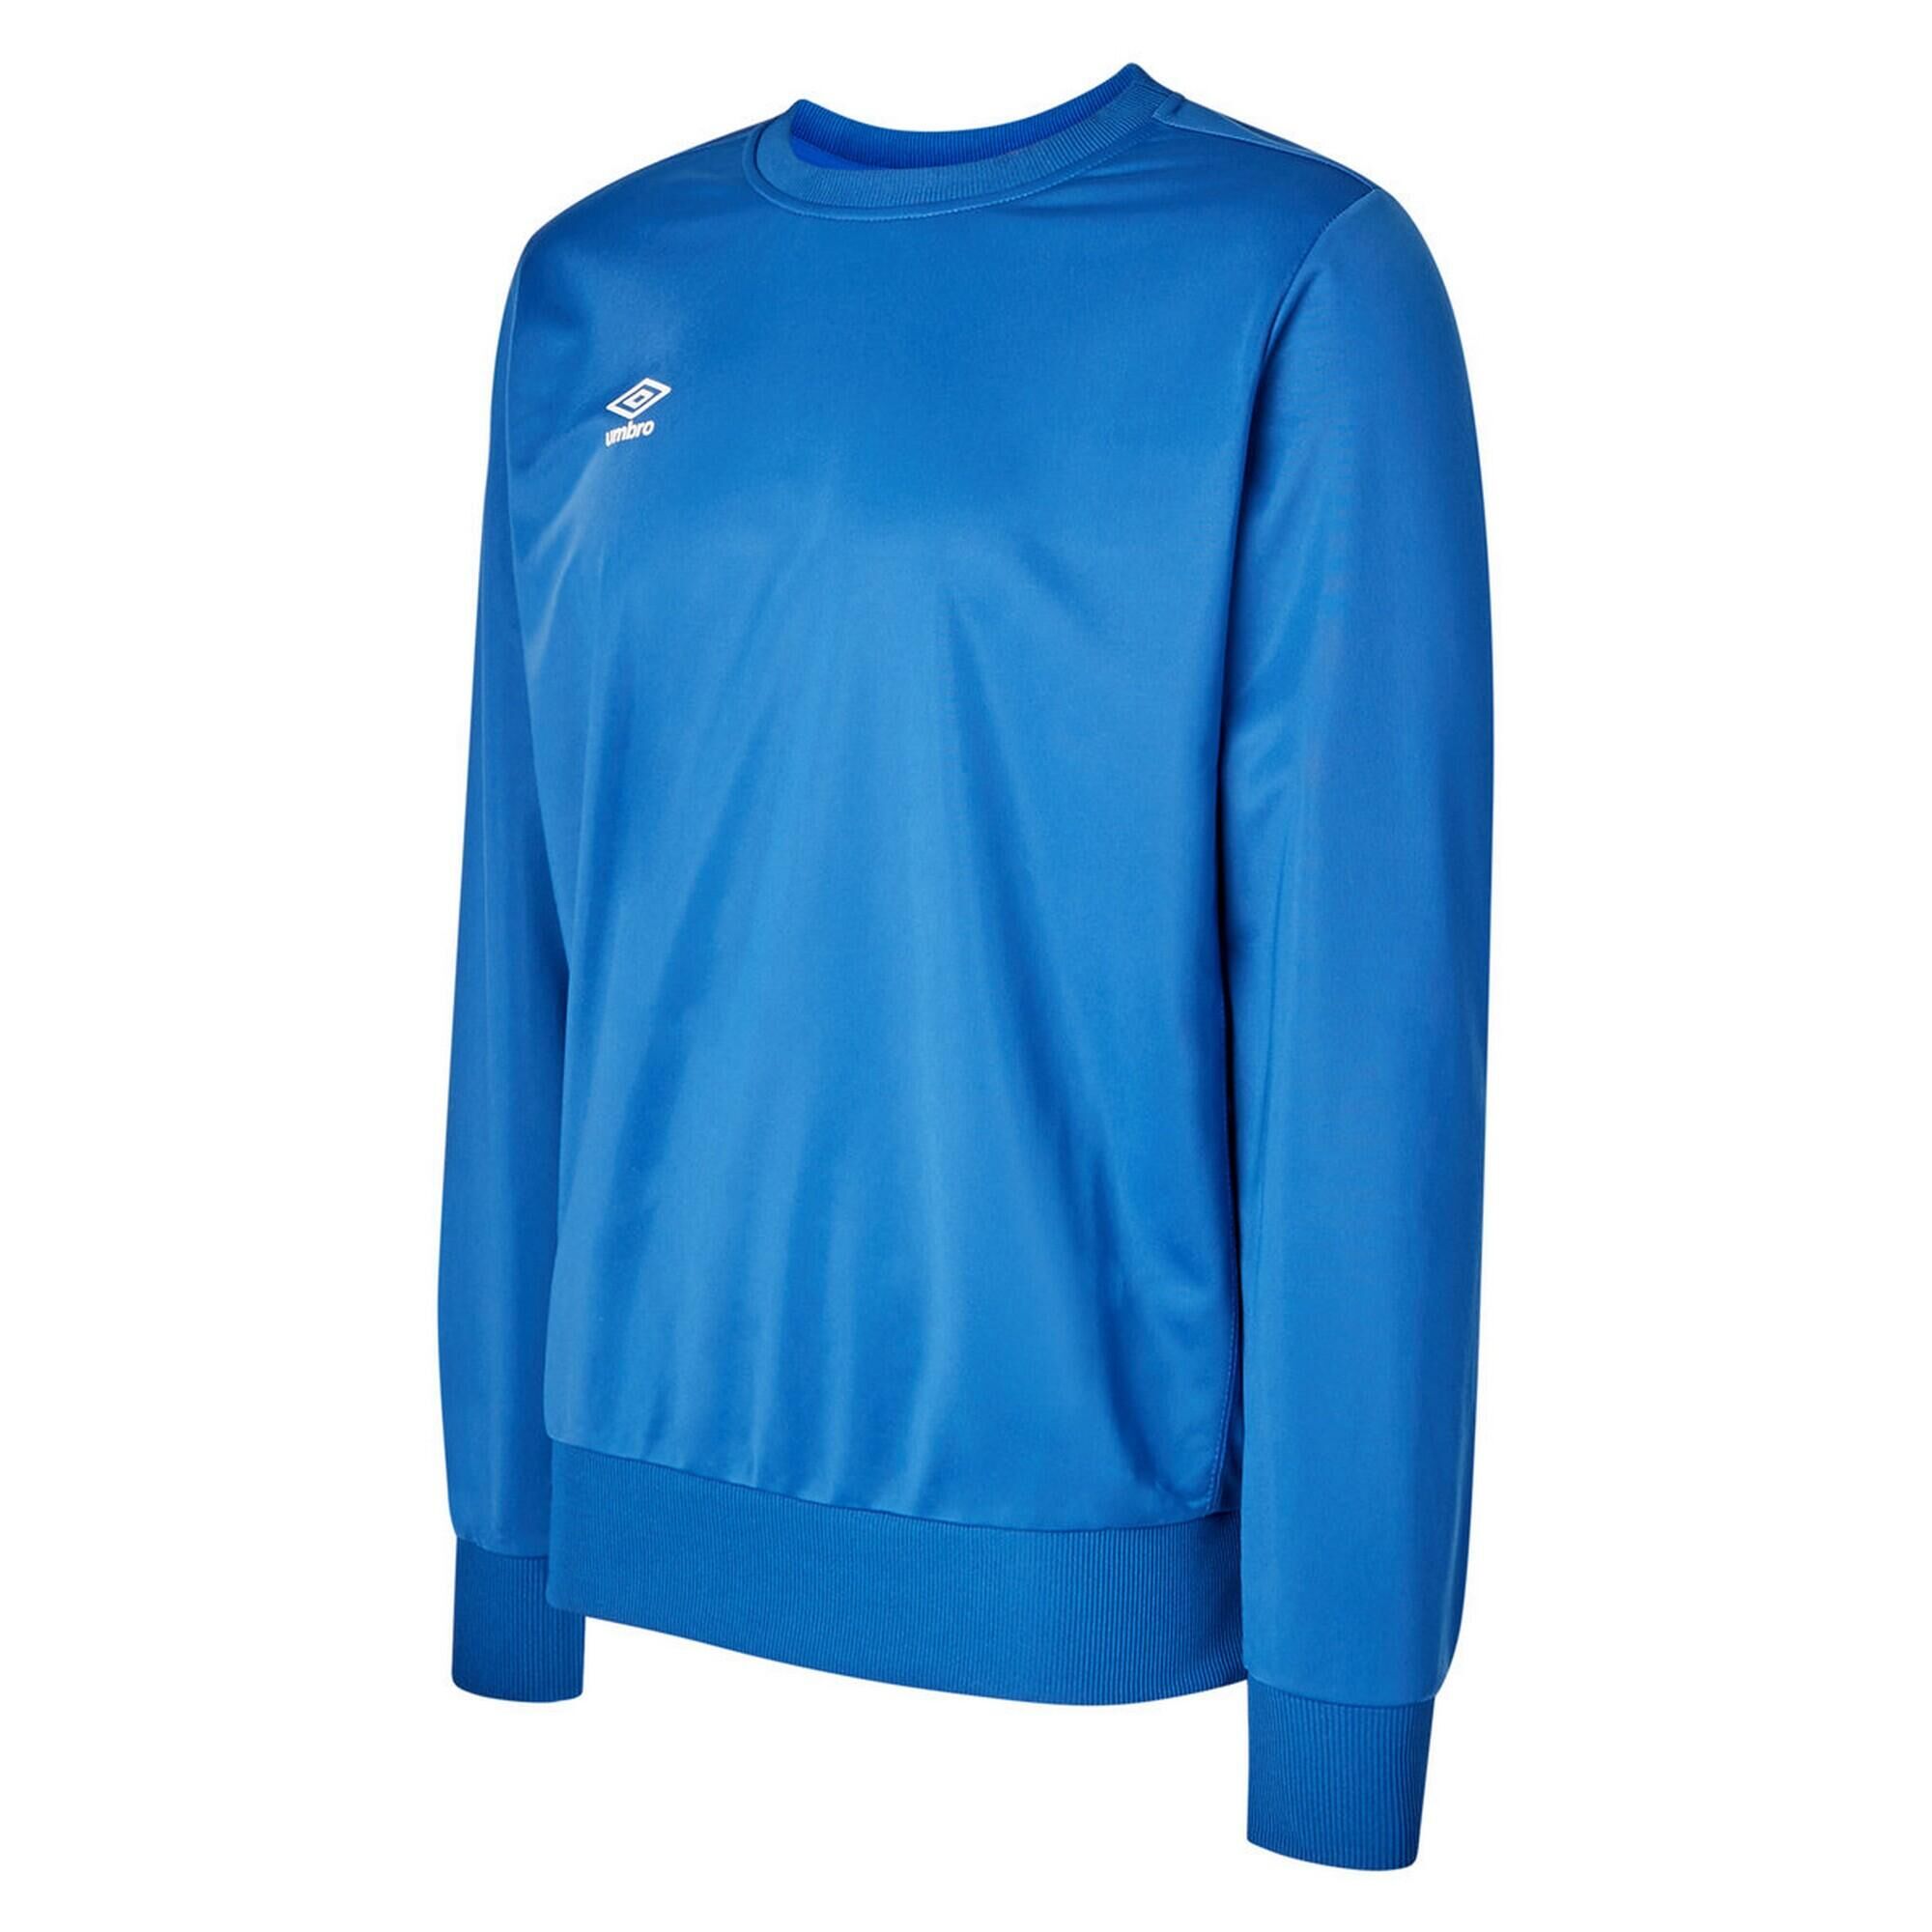 UMBRO Mens Polyester Sweatshirt (Royal Blue)